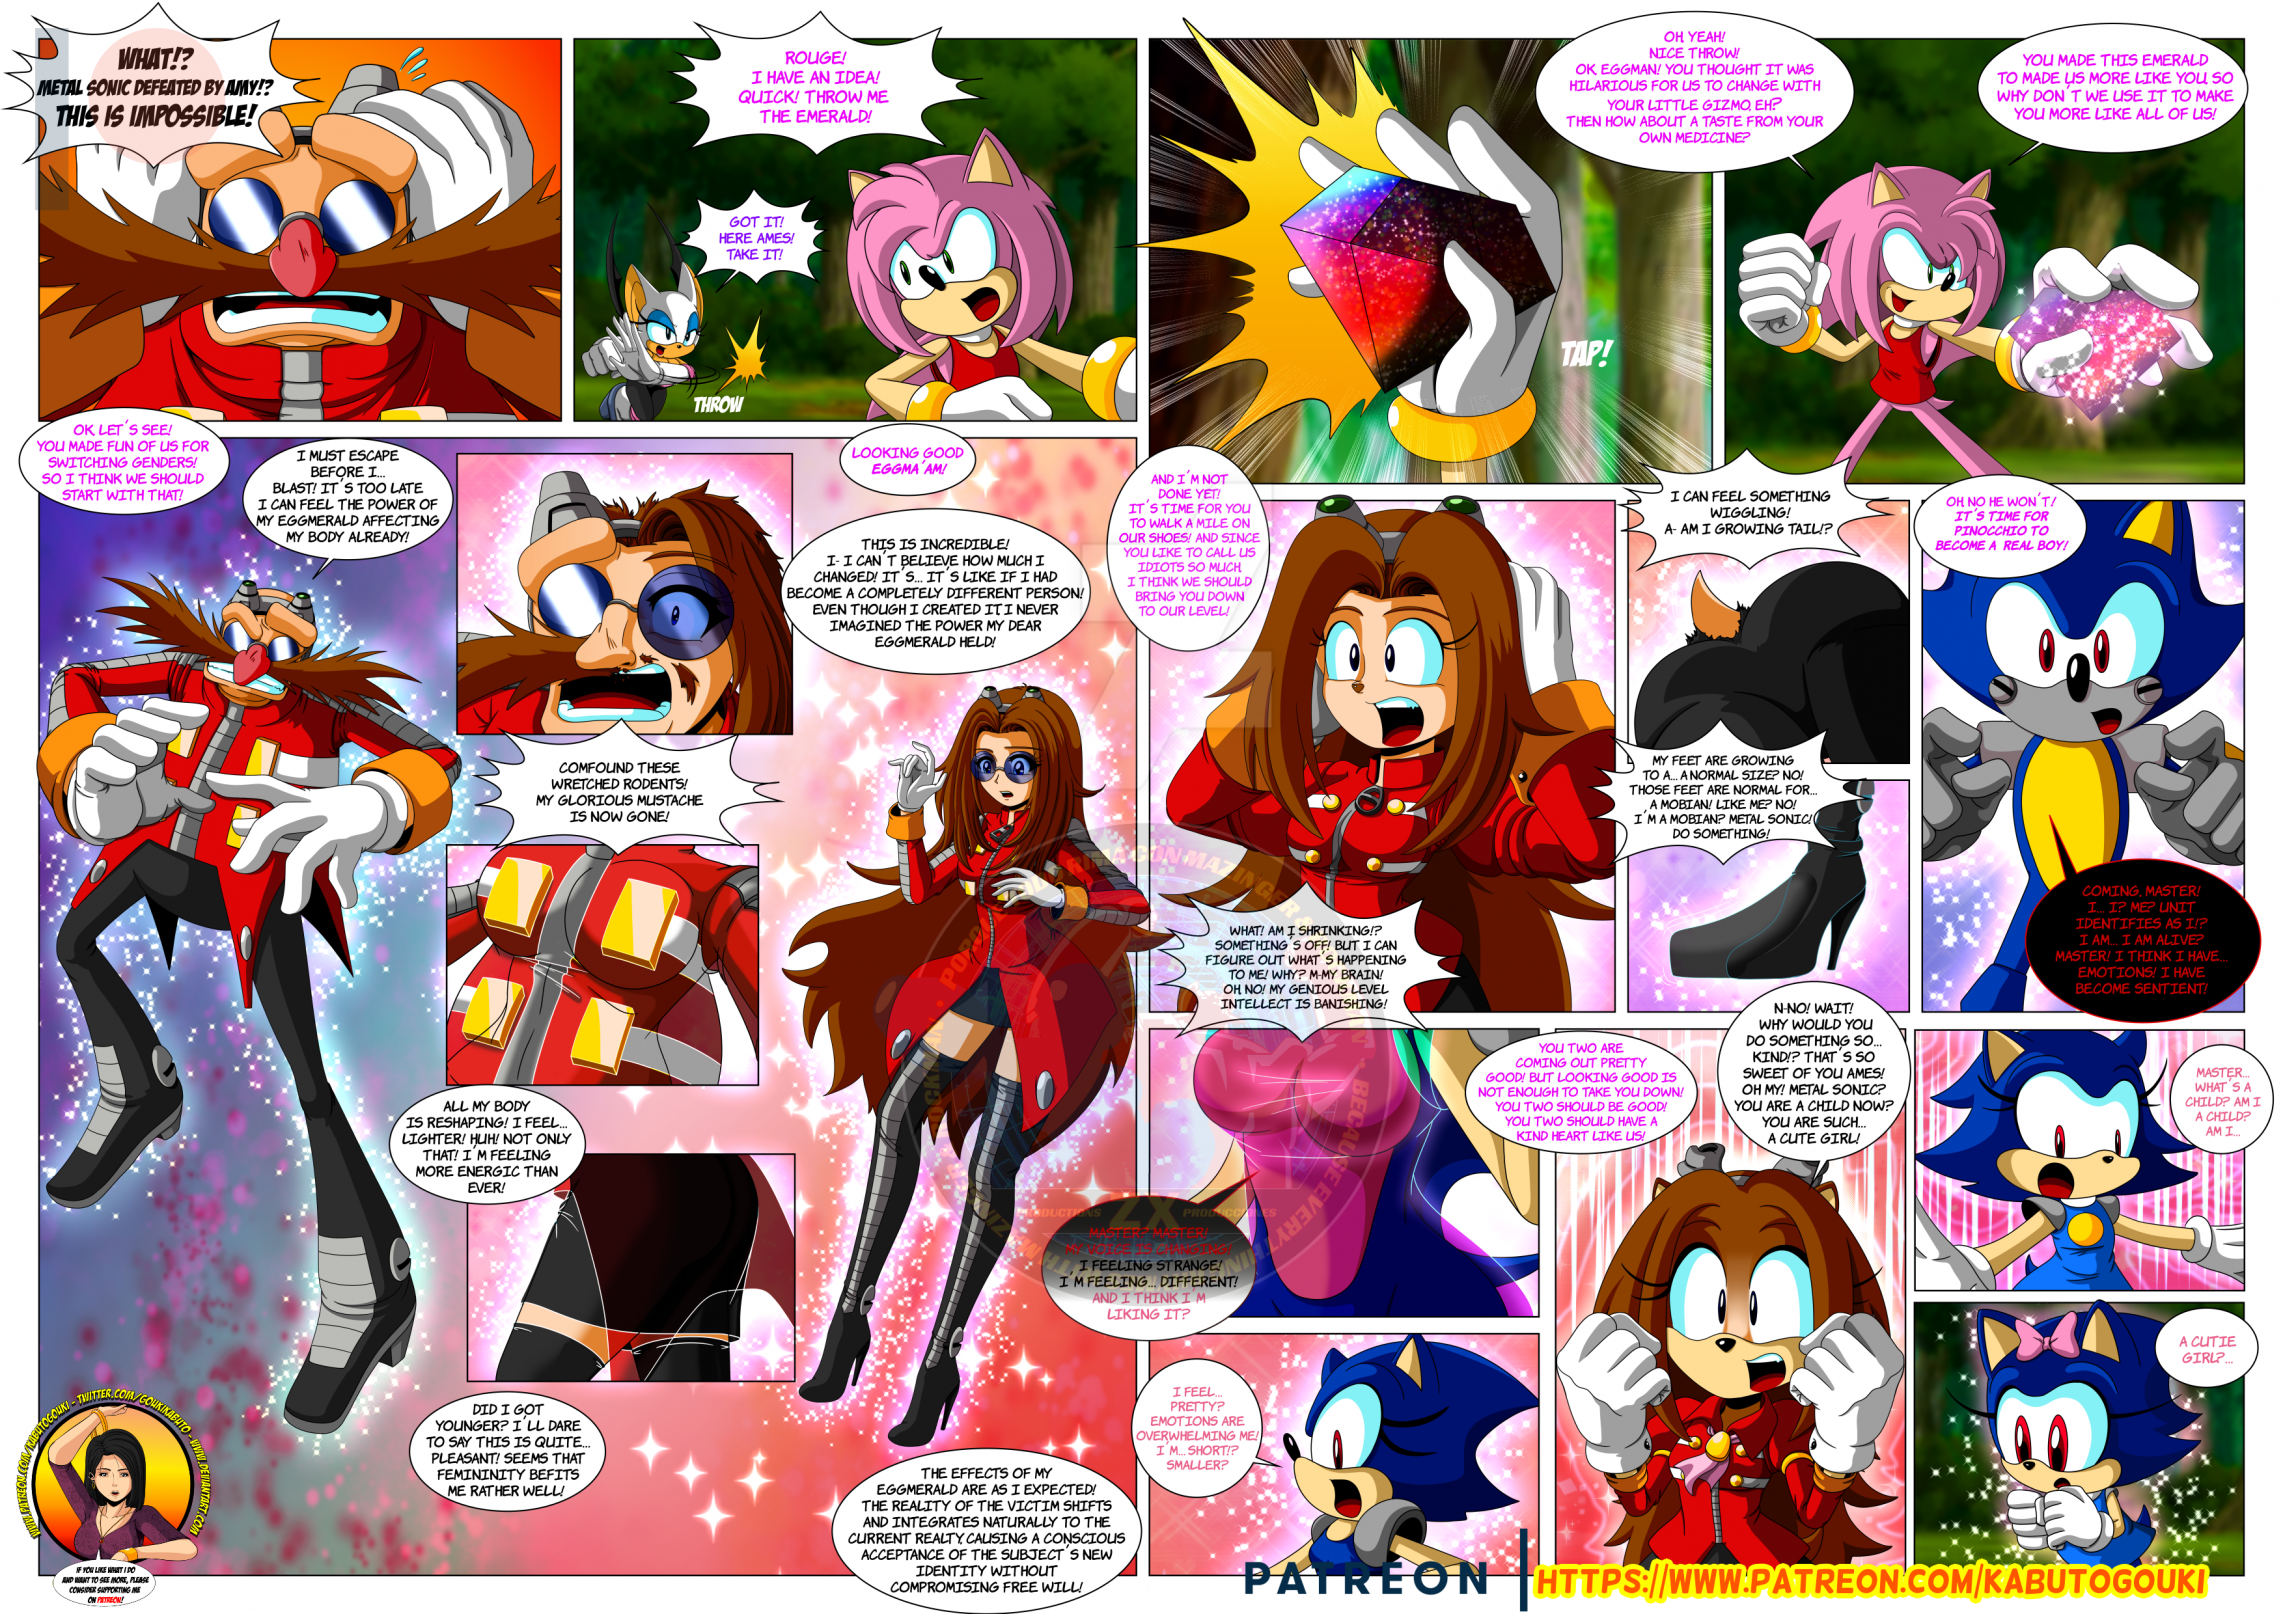 Imagem: Image - Metal Sonic 15.png, Sonic News Network